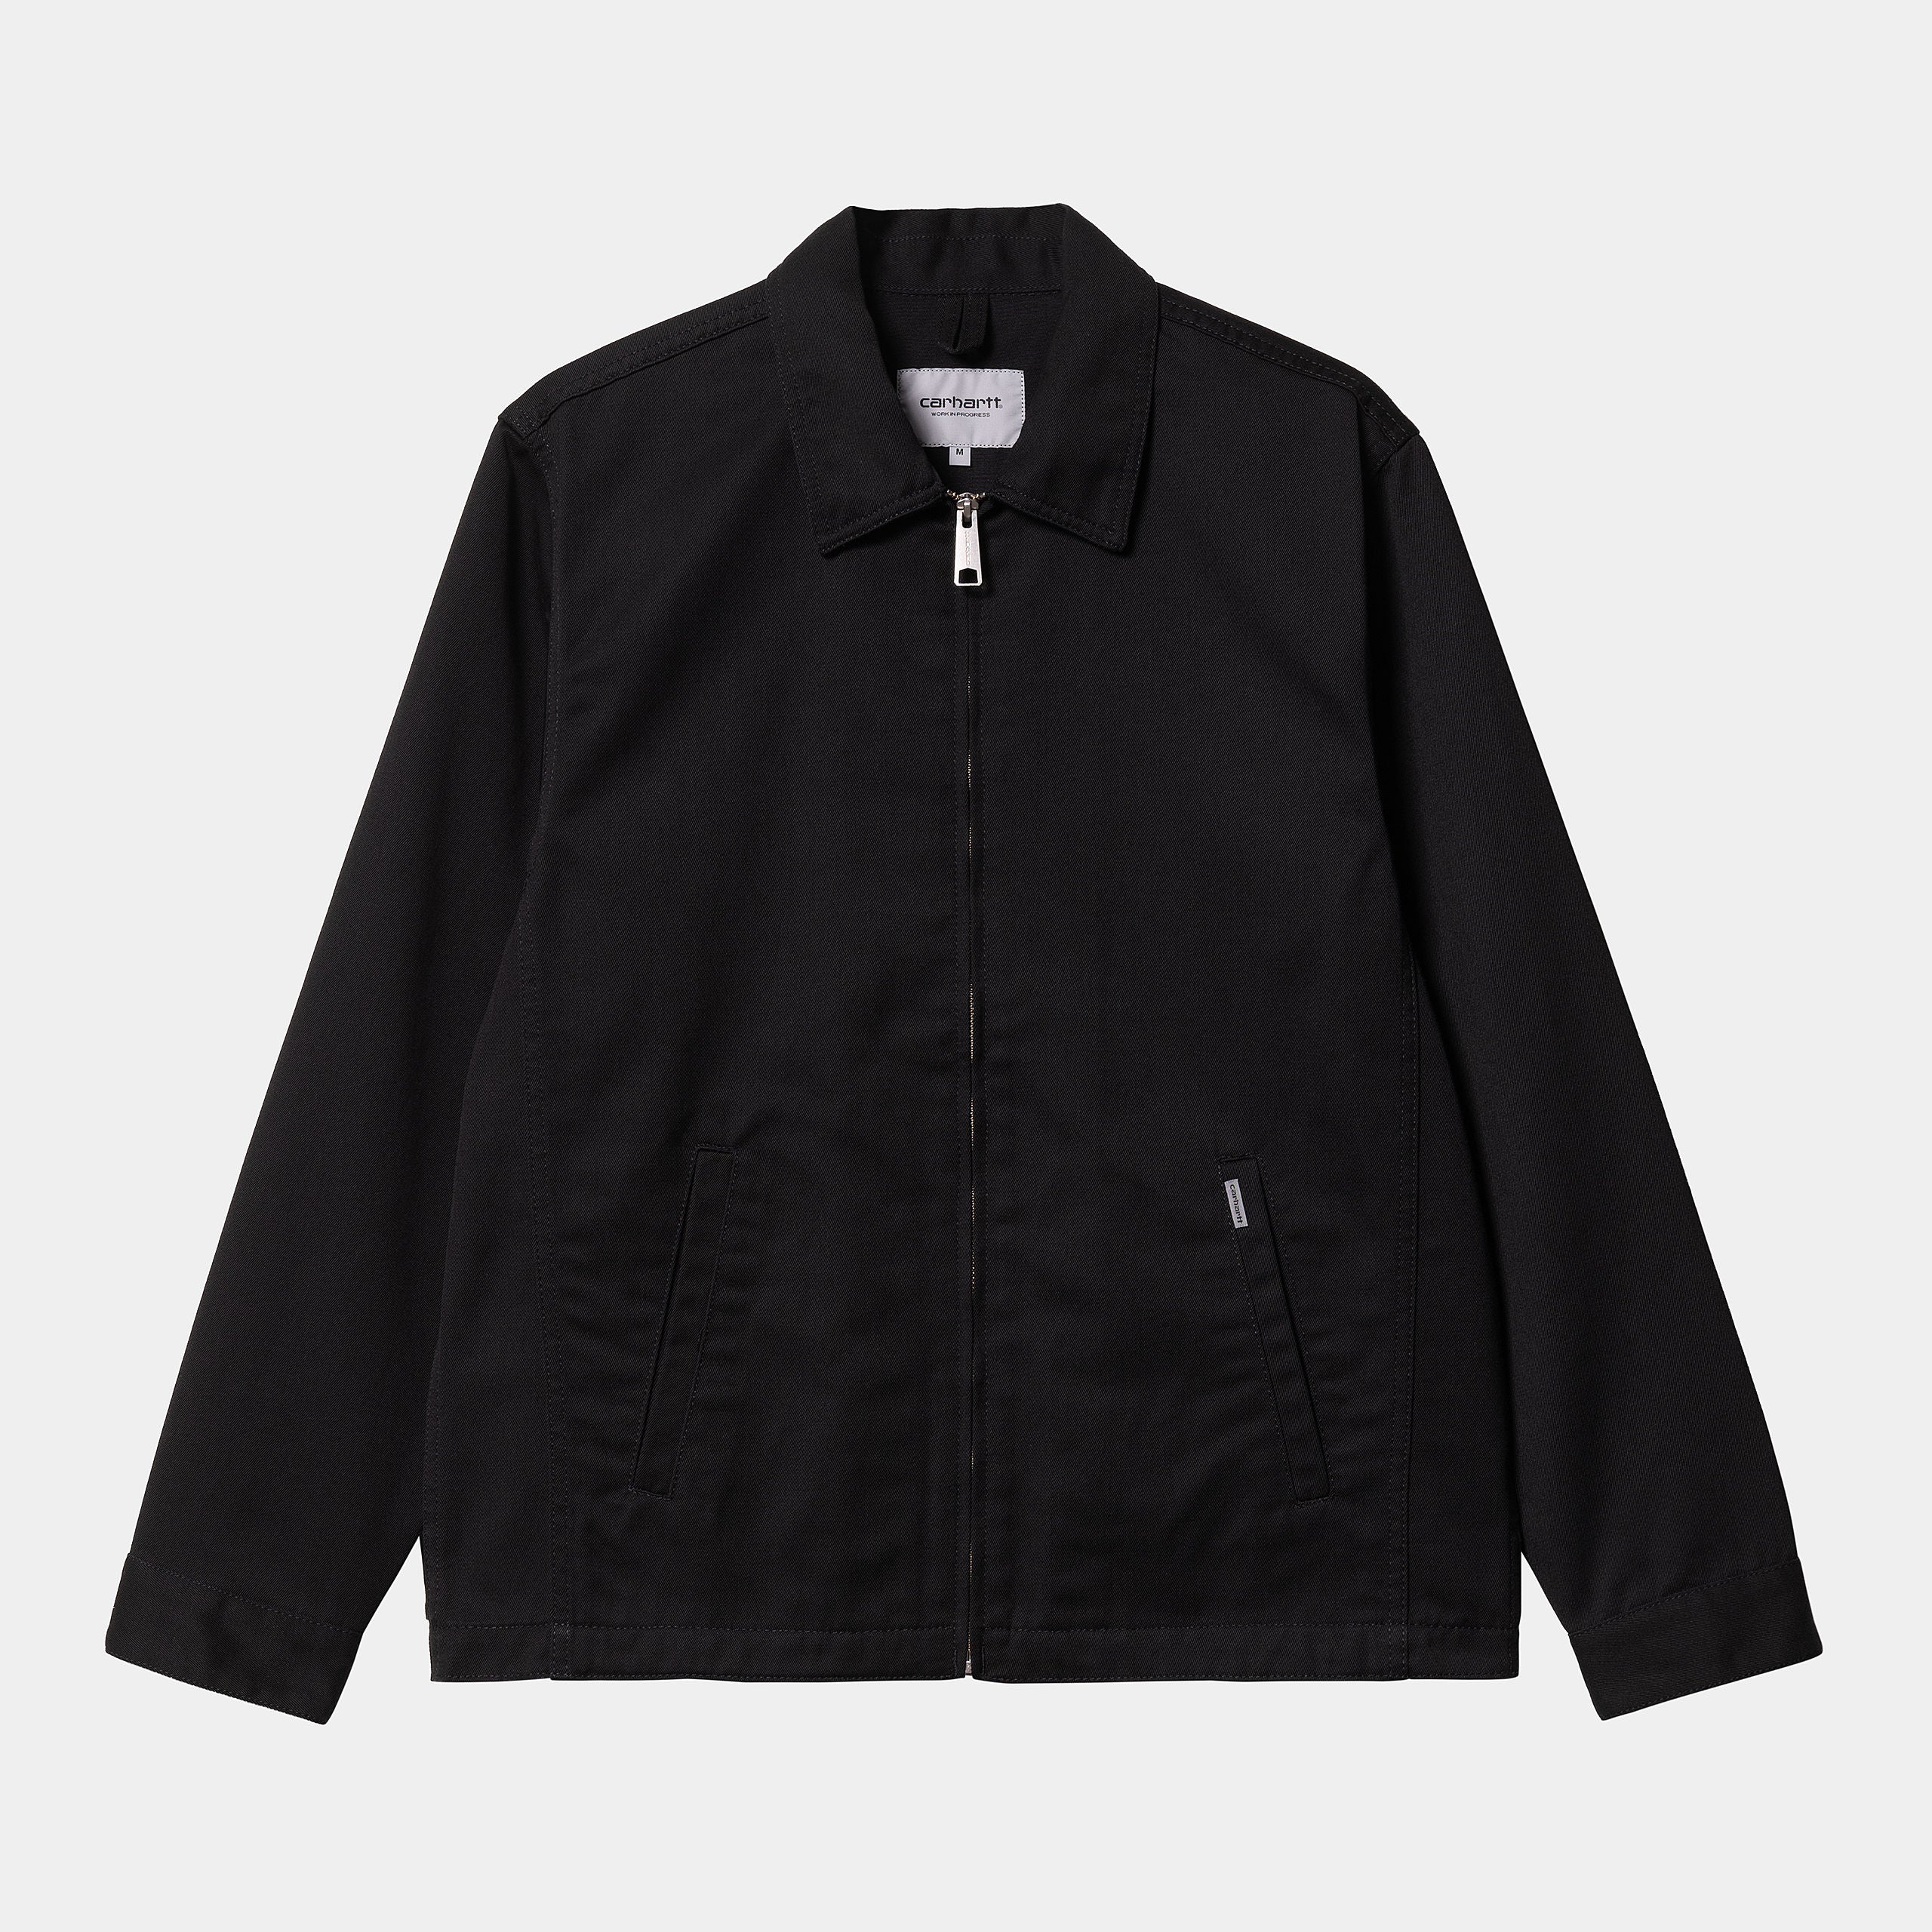 Carhartt WIP ACTIVE JACKET DEARBORN - Summer jacket - black rinsed